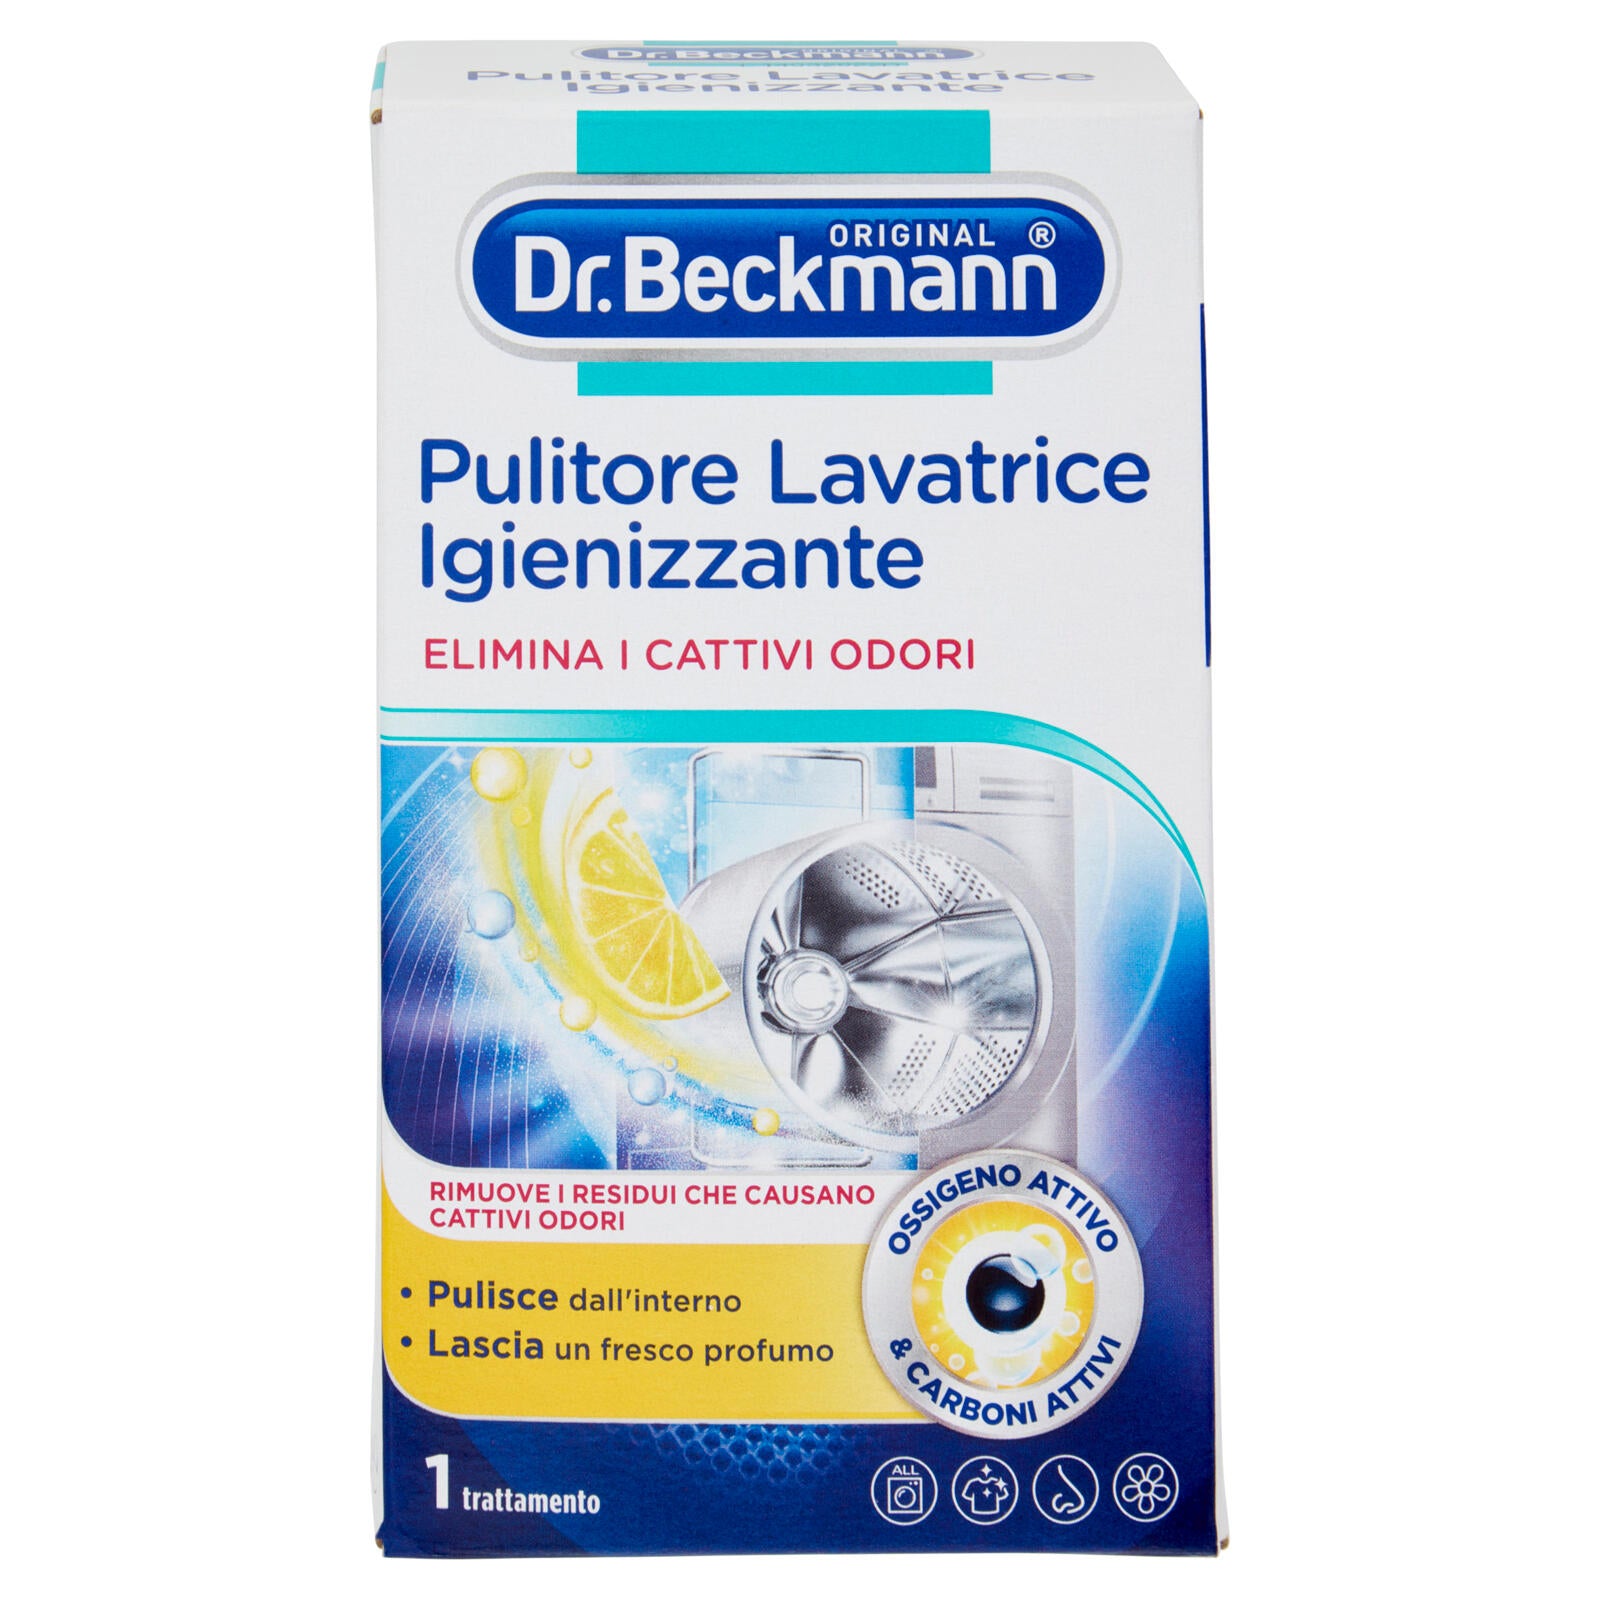 Dr. Beckmann Pulitore Lavatrice Igienizzante 250 g ->